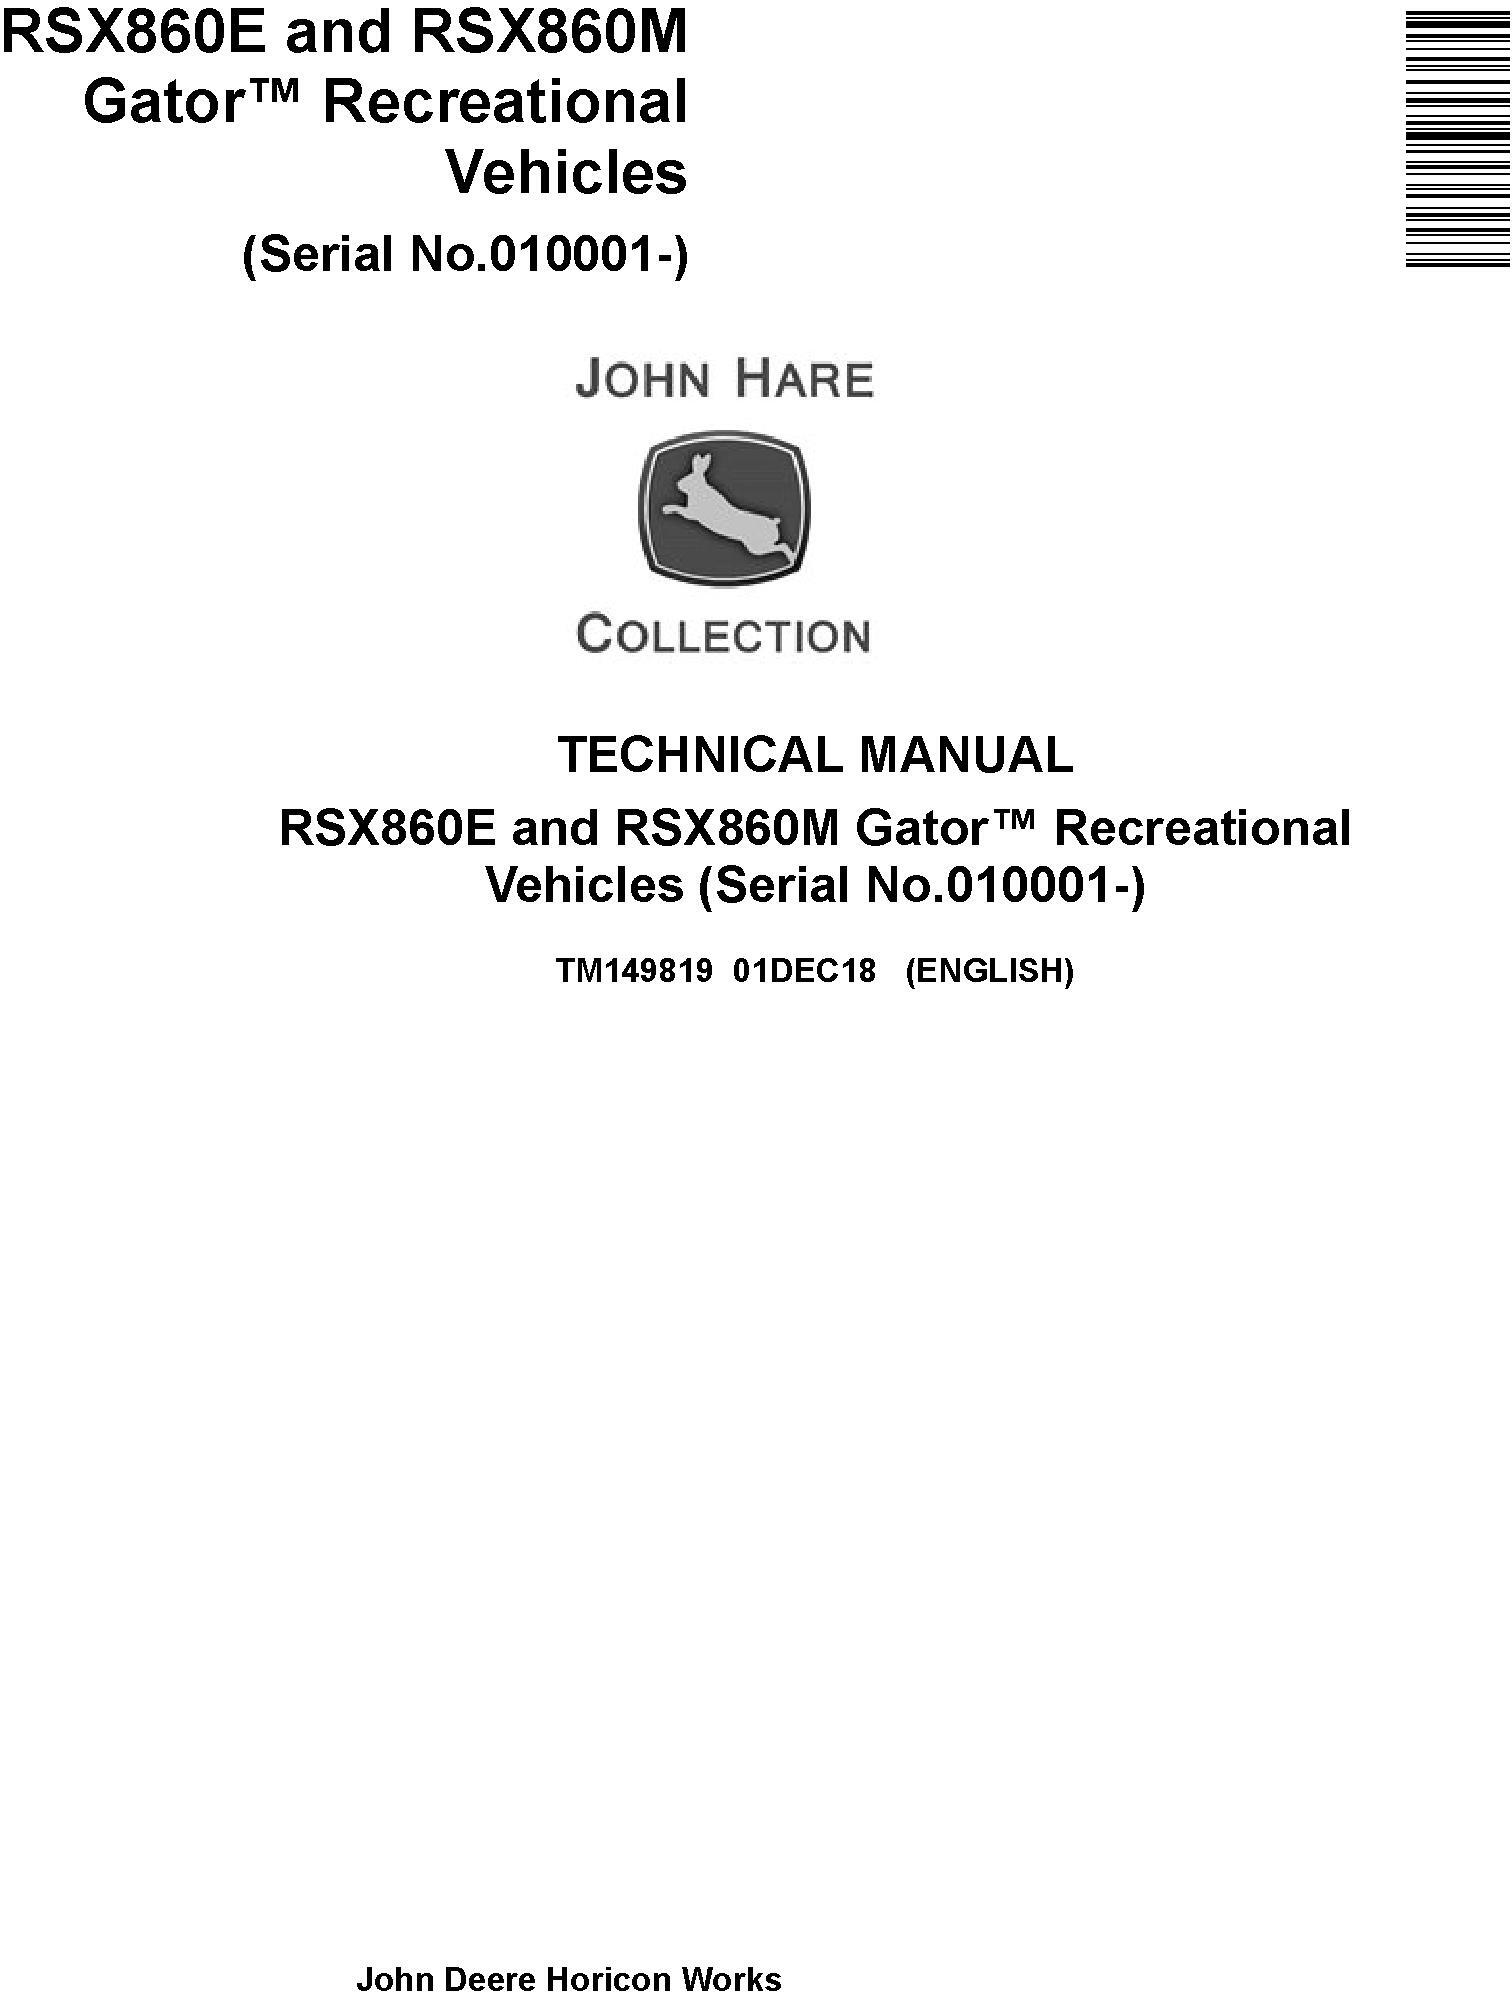 John Deere RSX860E RSX860M Gator Recreational Vehicles Technical Manual TM149819